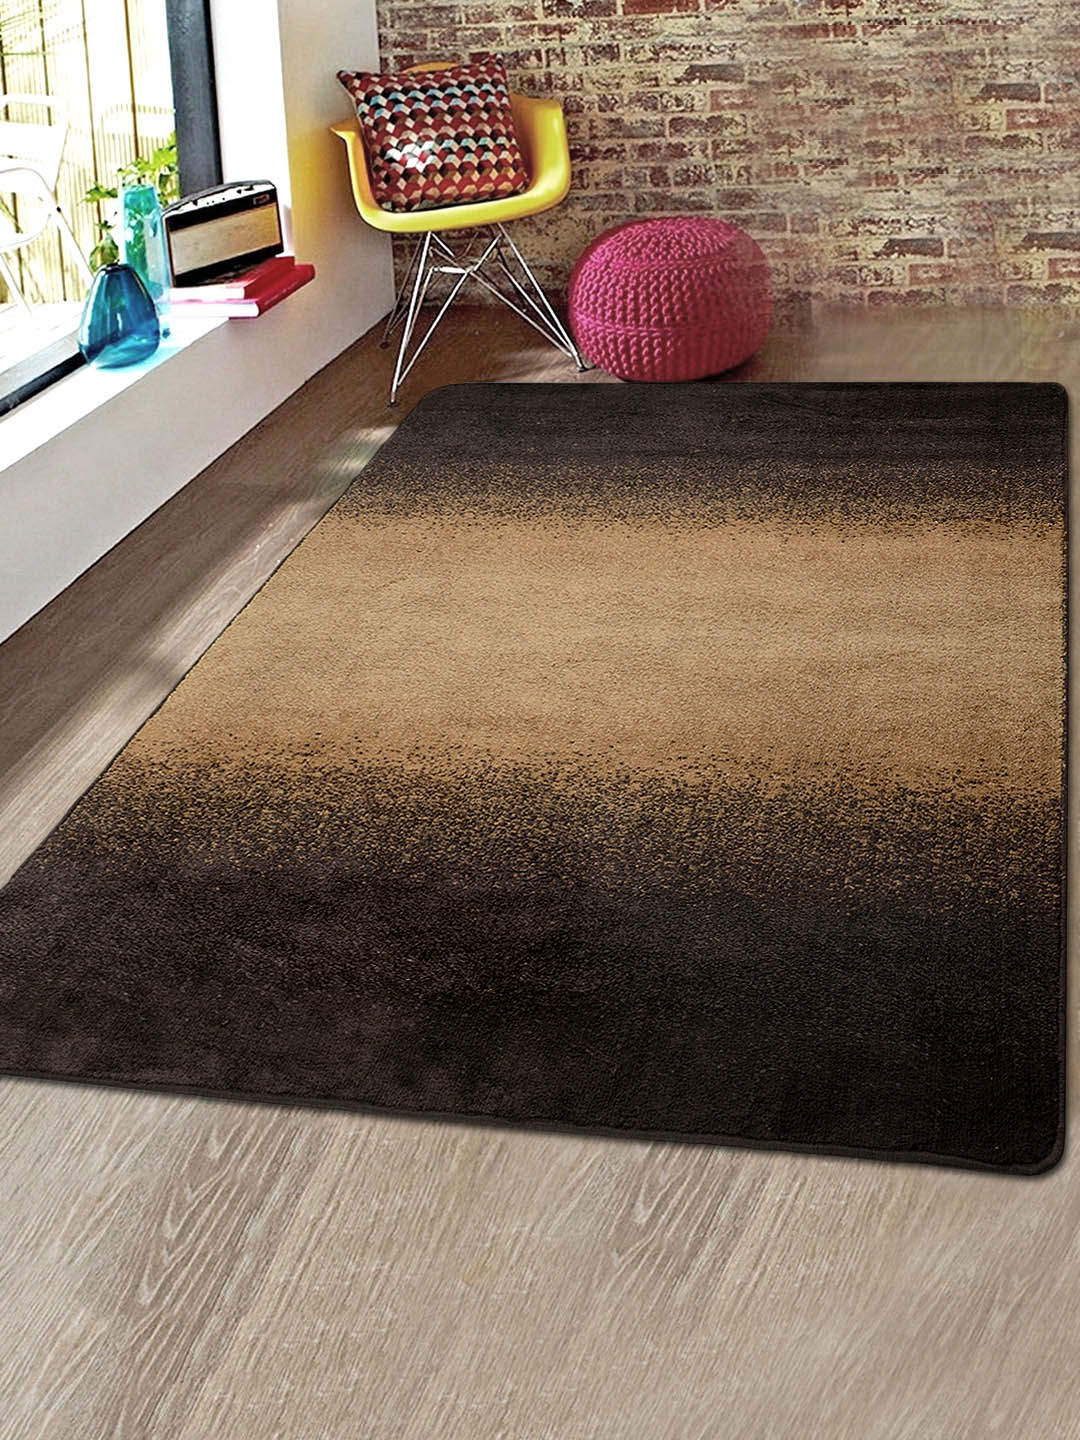 Saral Home Brown & Beige Colourblocked Microfiber Anti-Skid Carpet Price in India